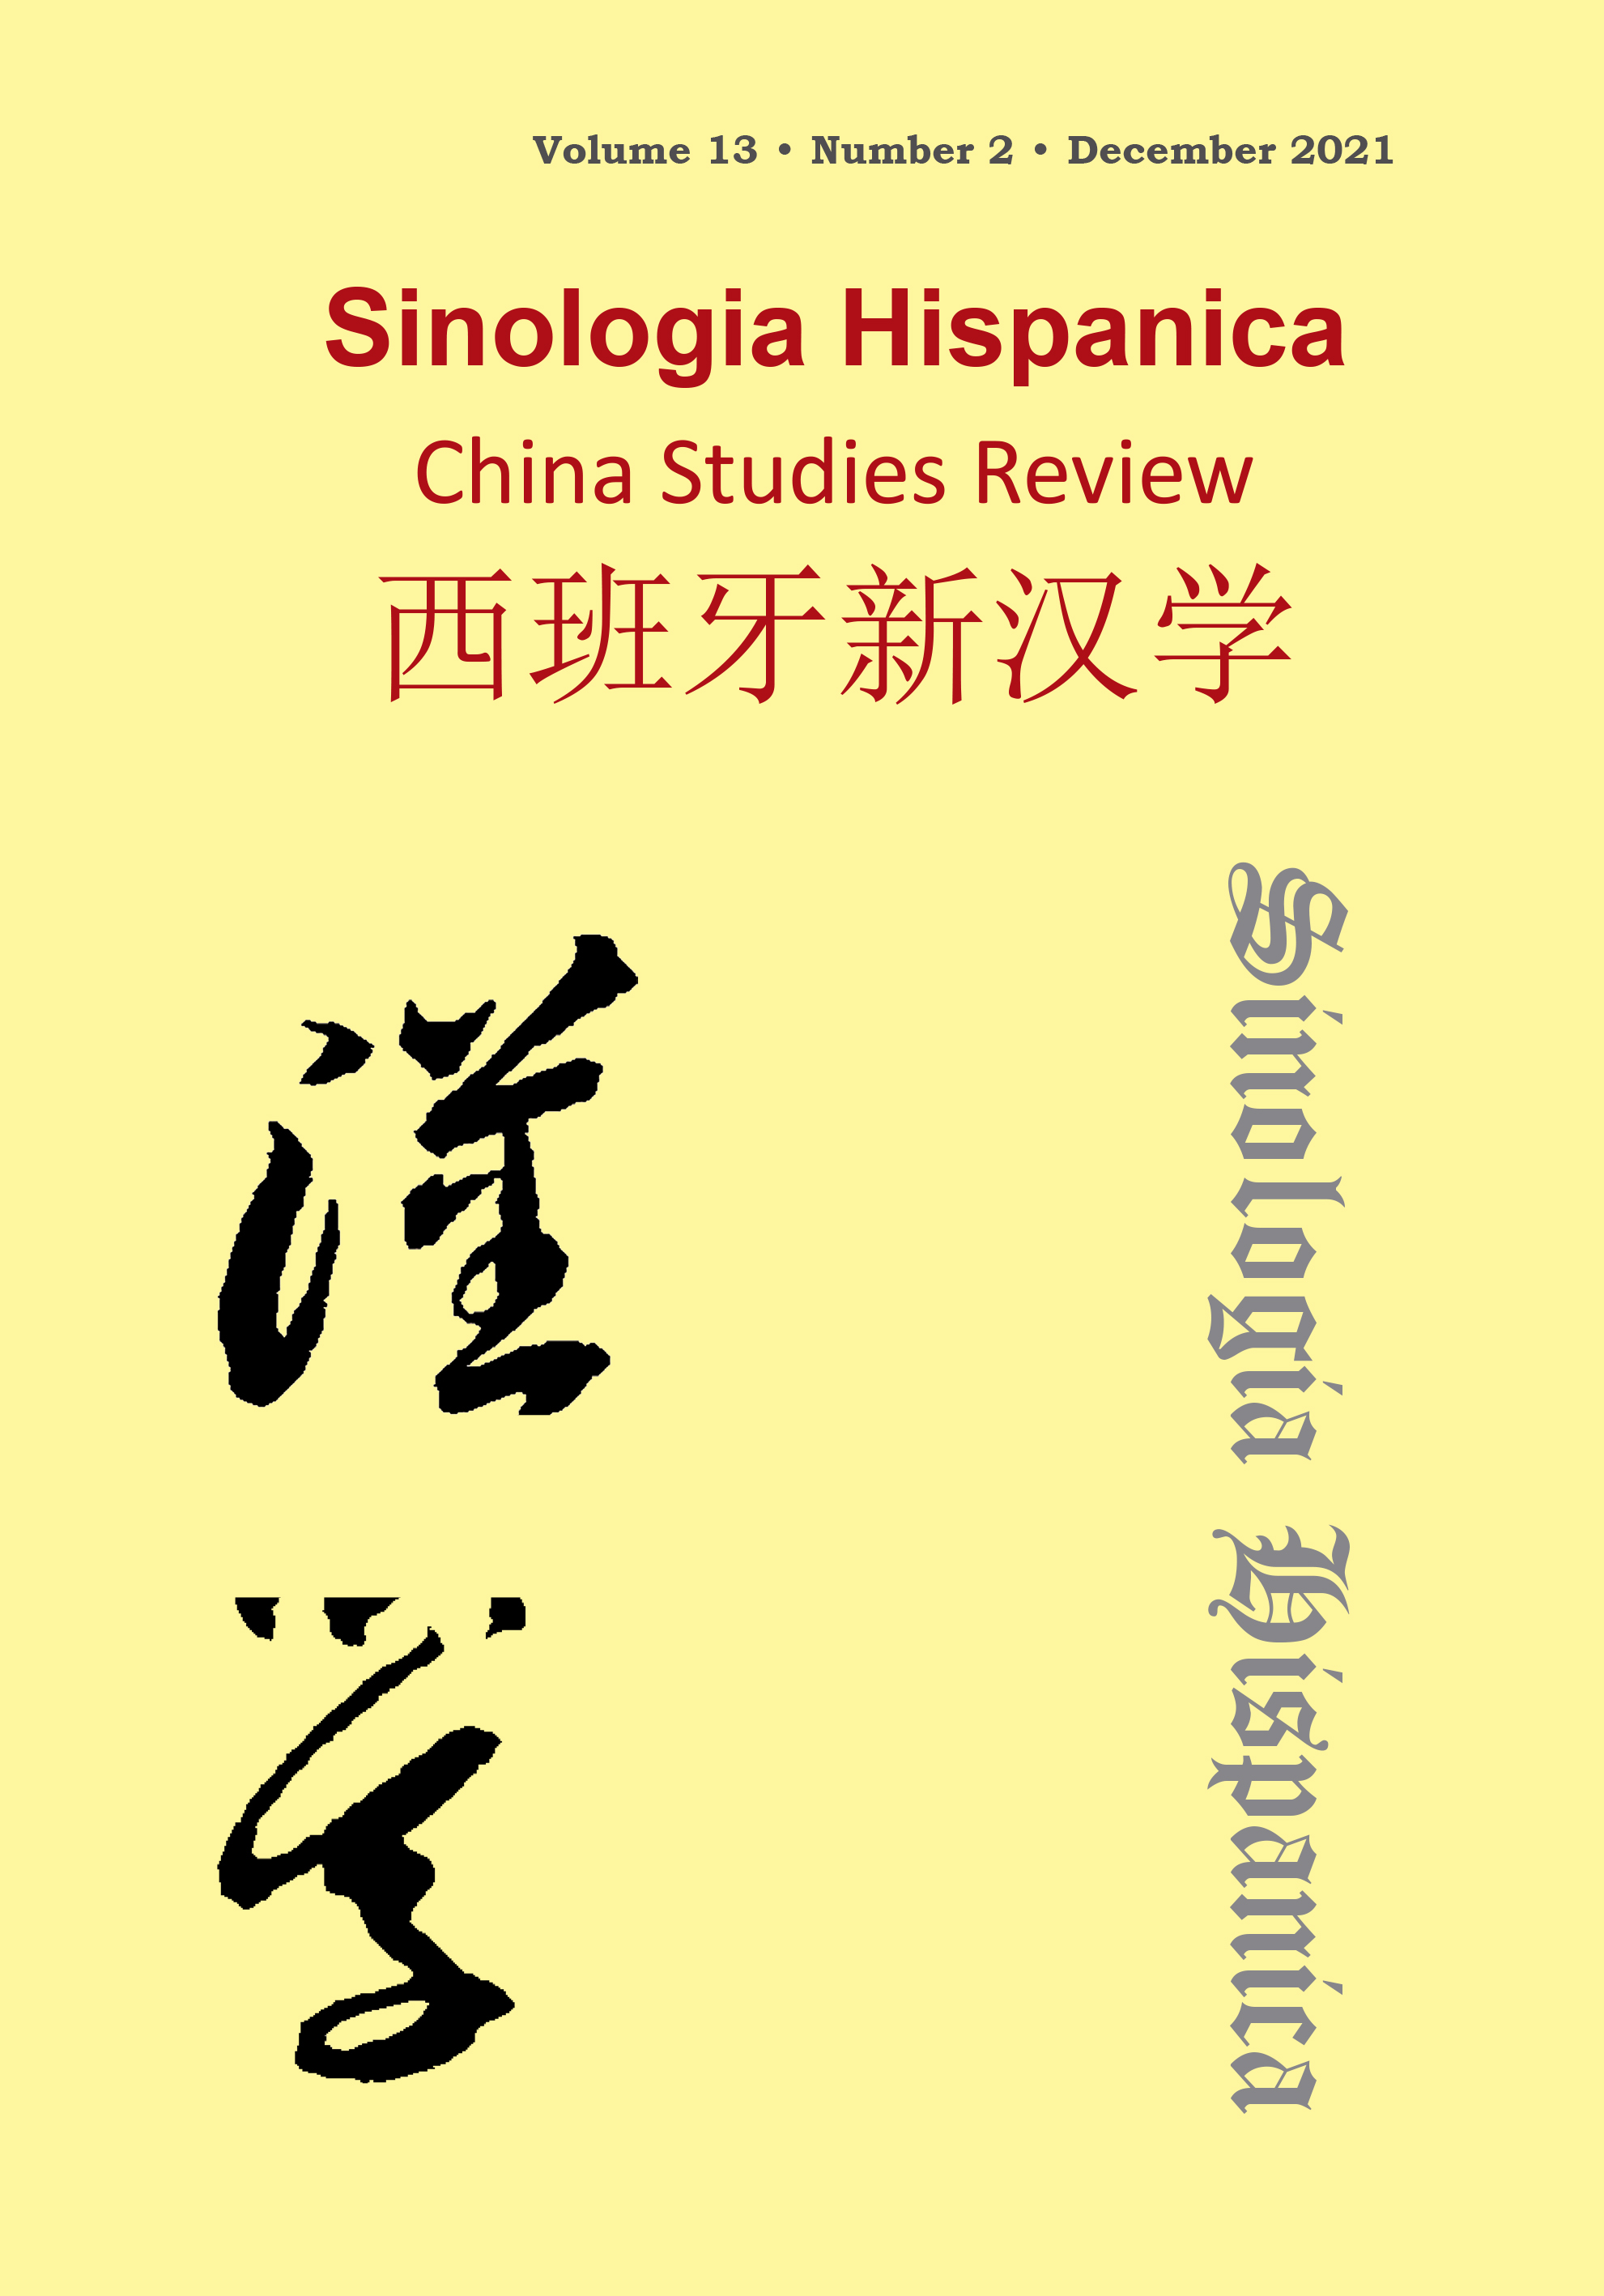 					View Vol. 2 No. 13 (2021): Vol. 13, Núm. 2 (2021): Sinologia Hispanica China Studies Review
				